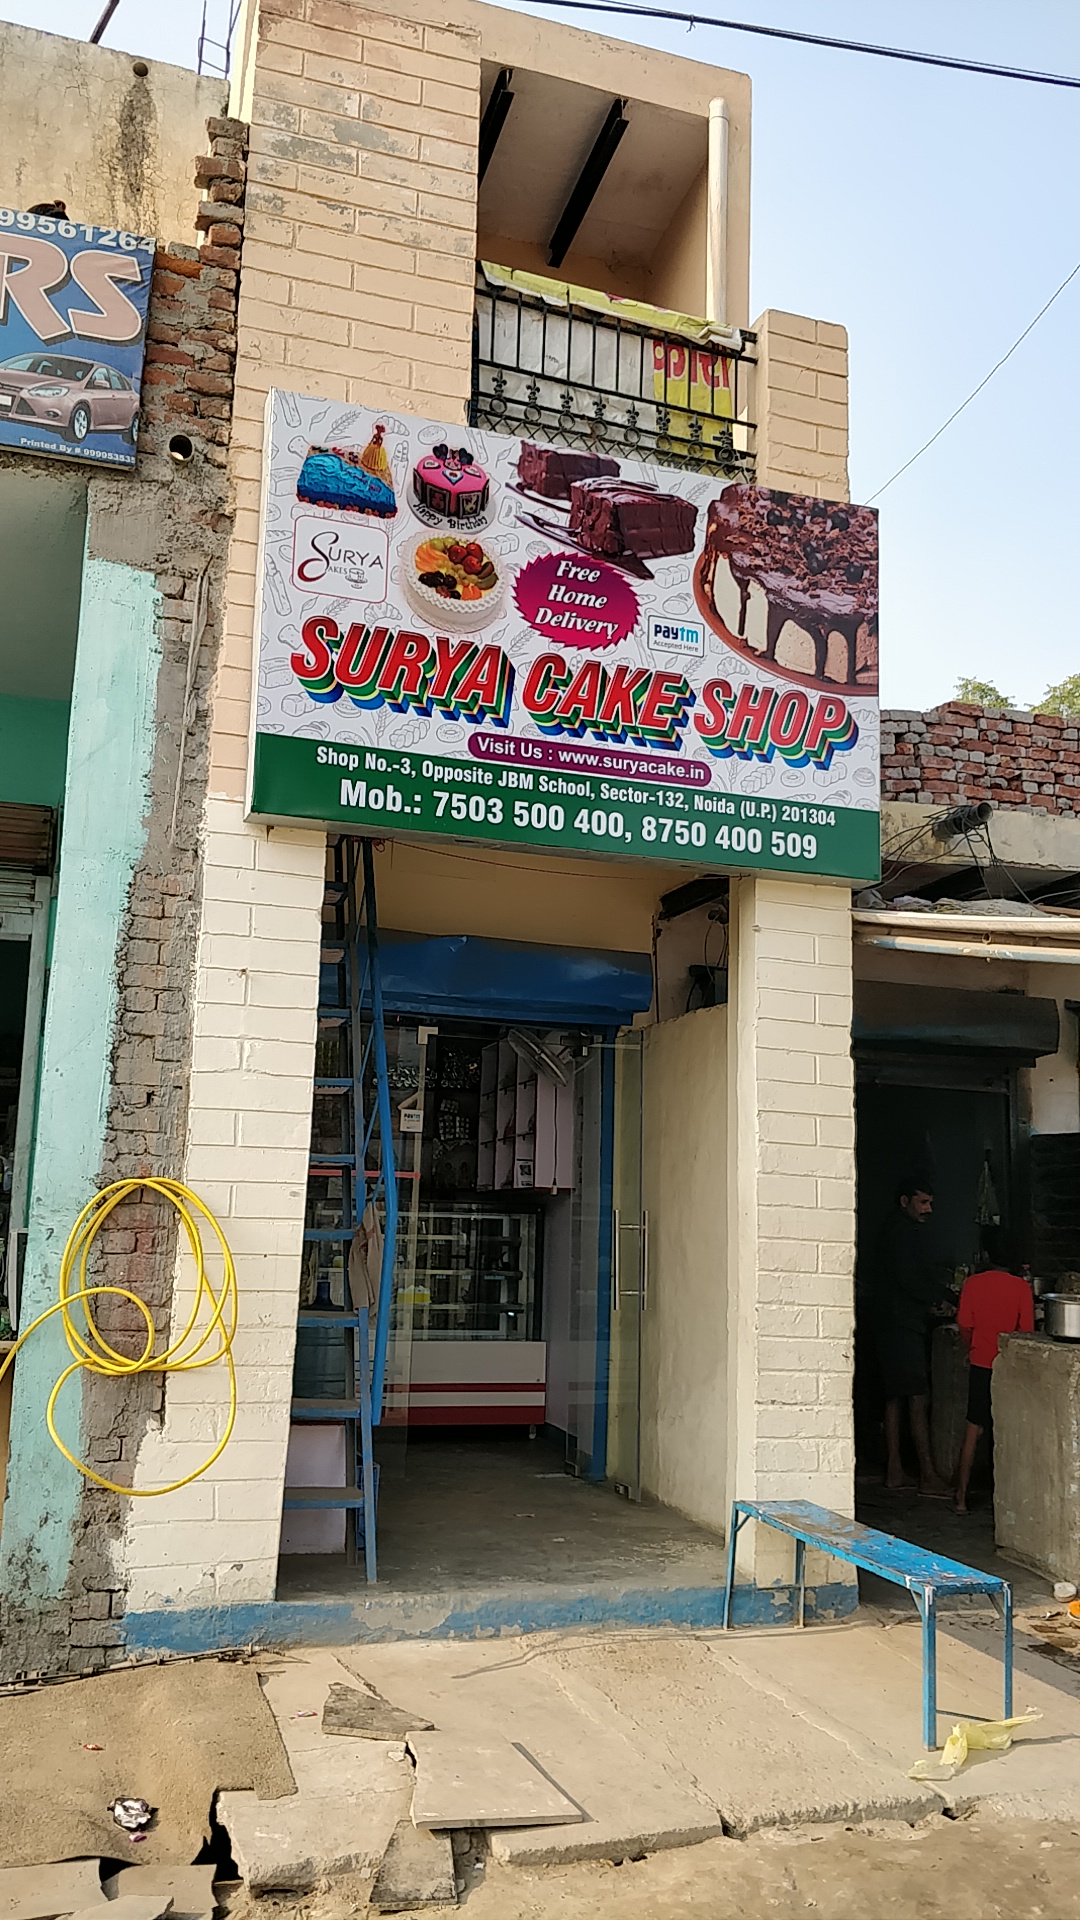 Surya cake shop